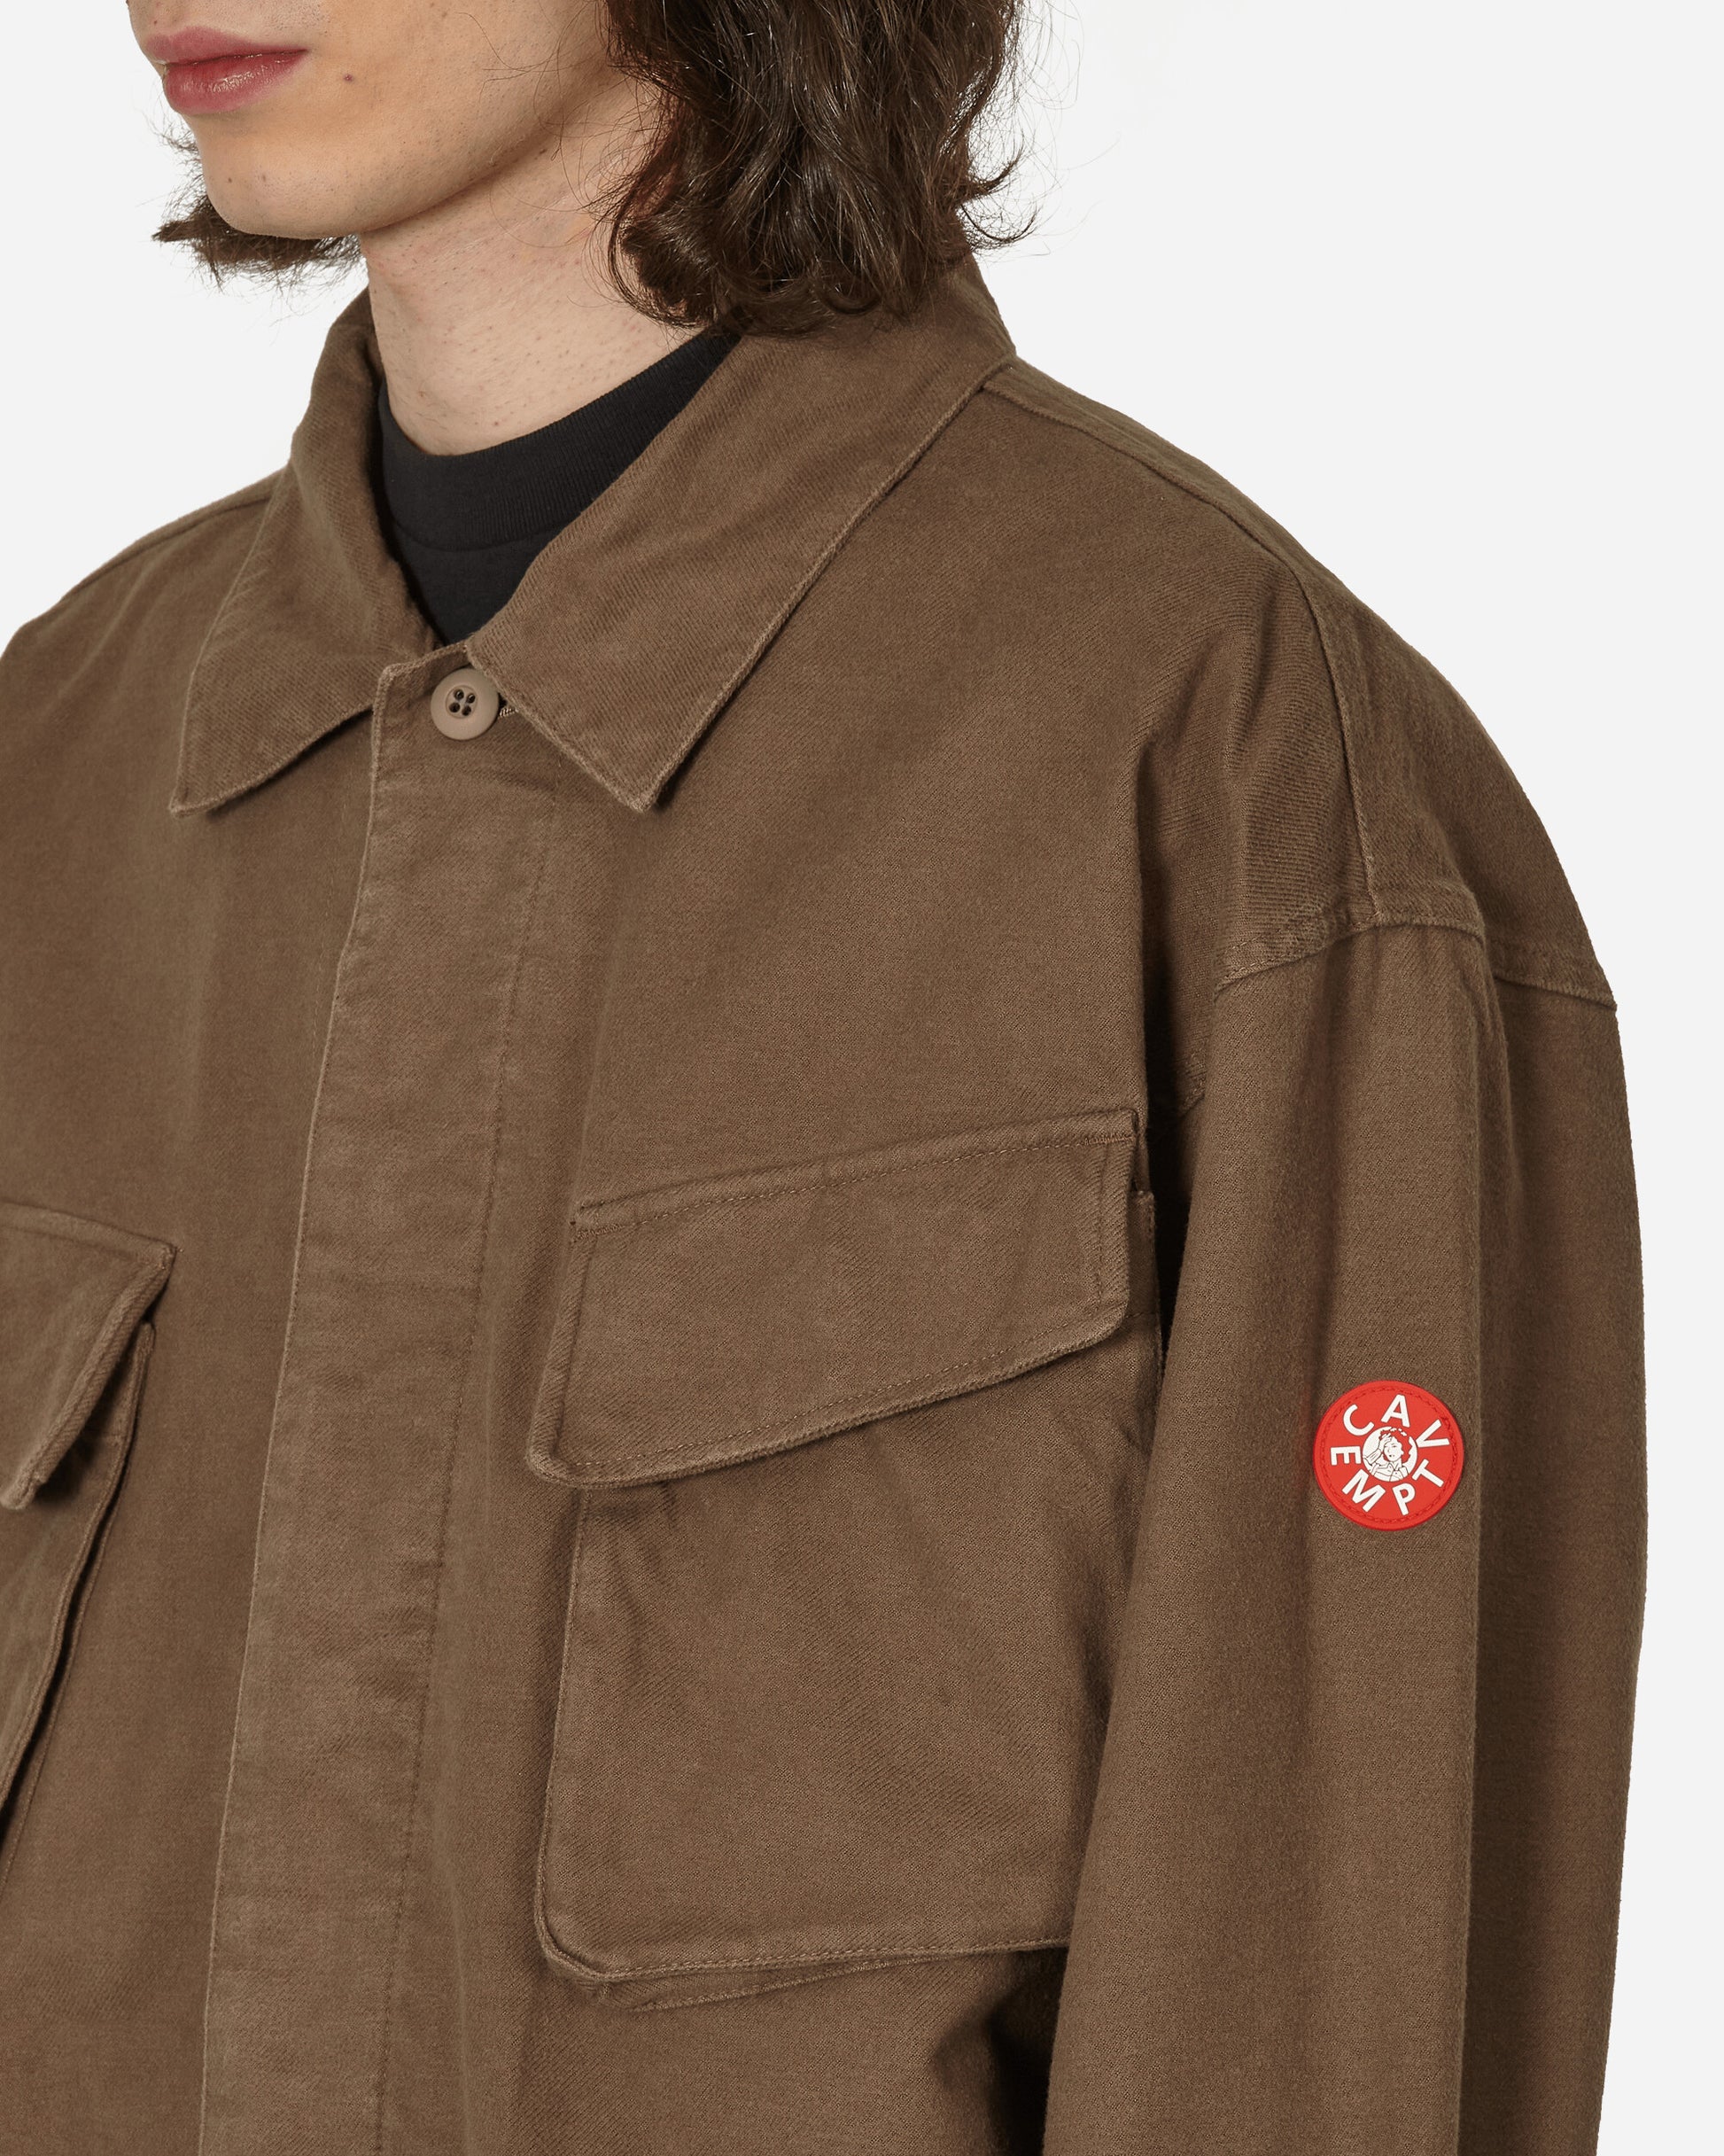 Cav Empt Community Button Jacket Brown Coats and Jackets Bomber Jackets CES24JK12 001